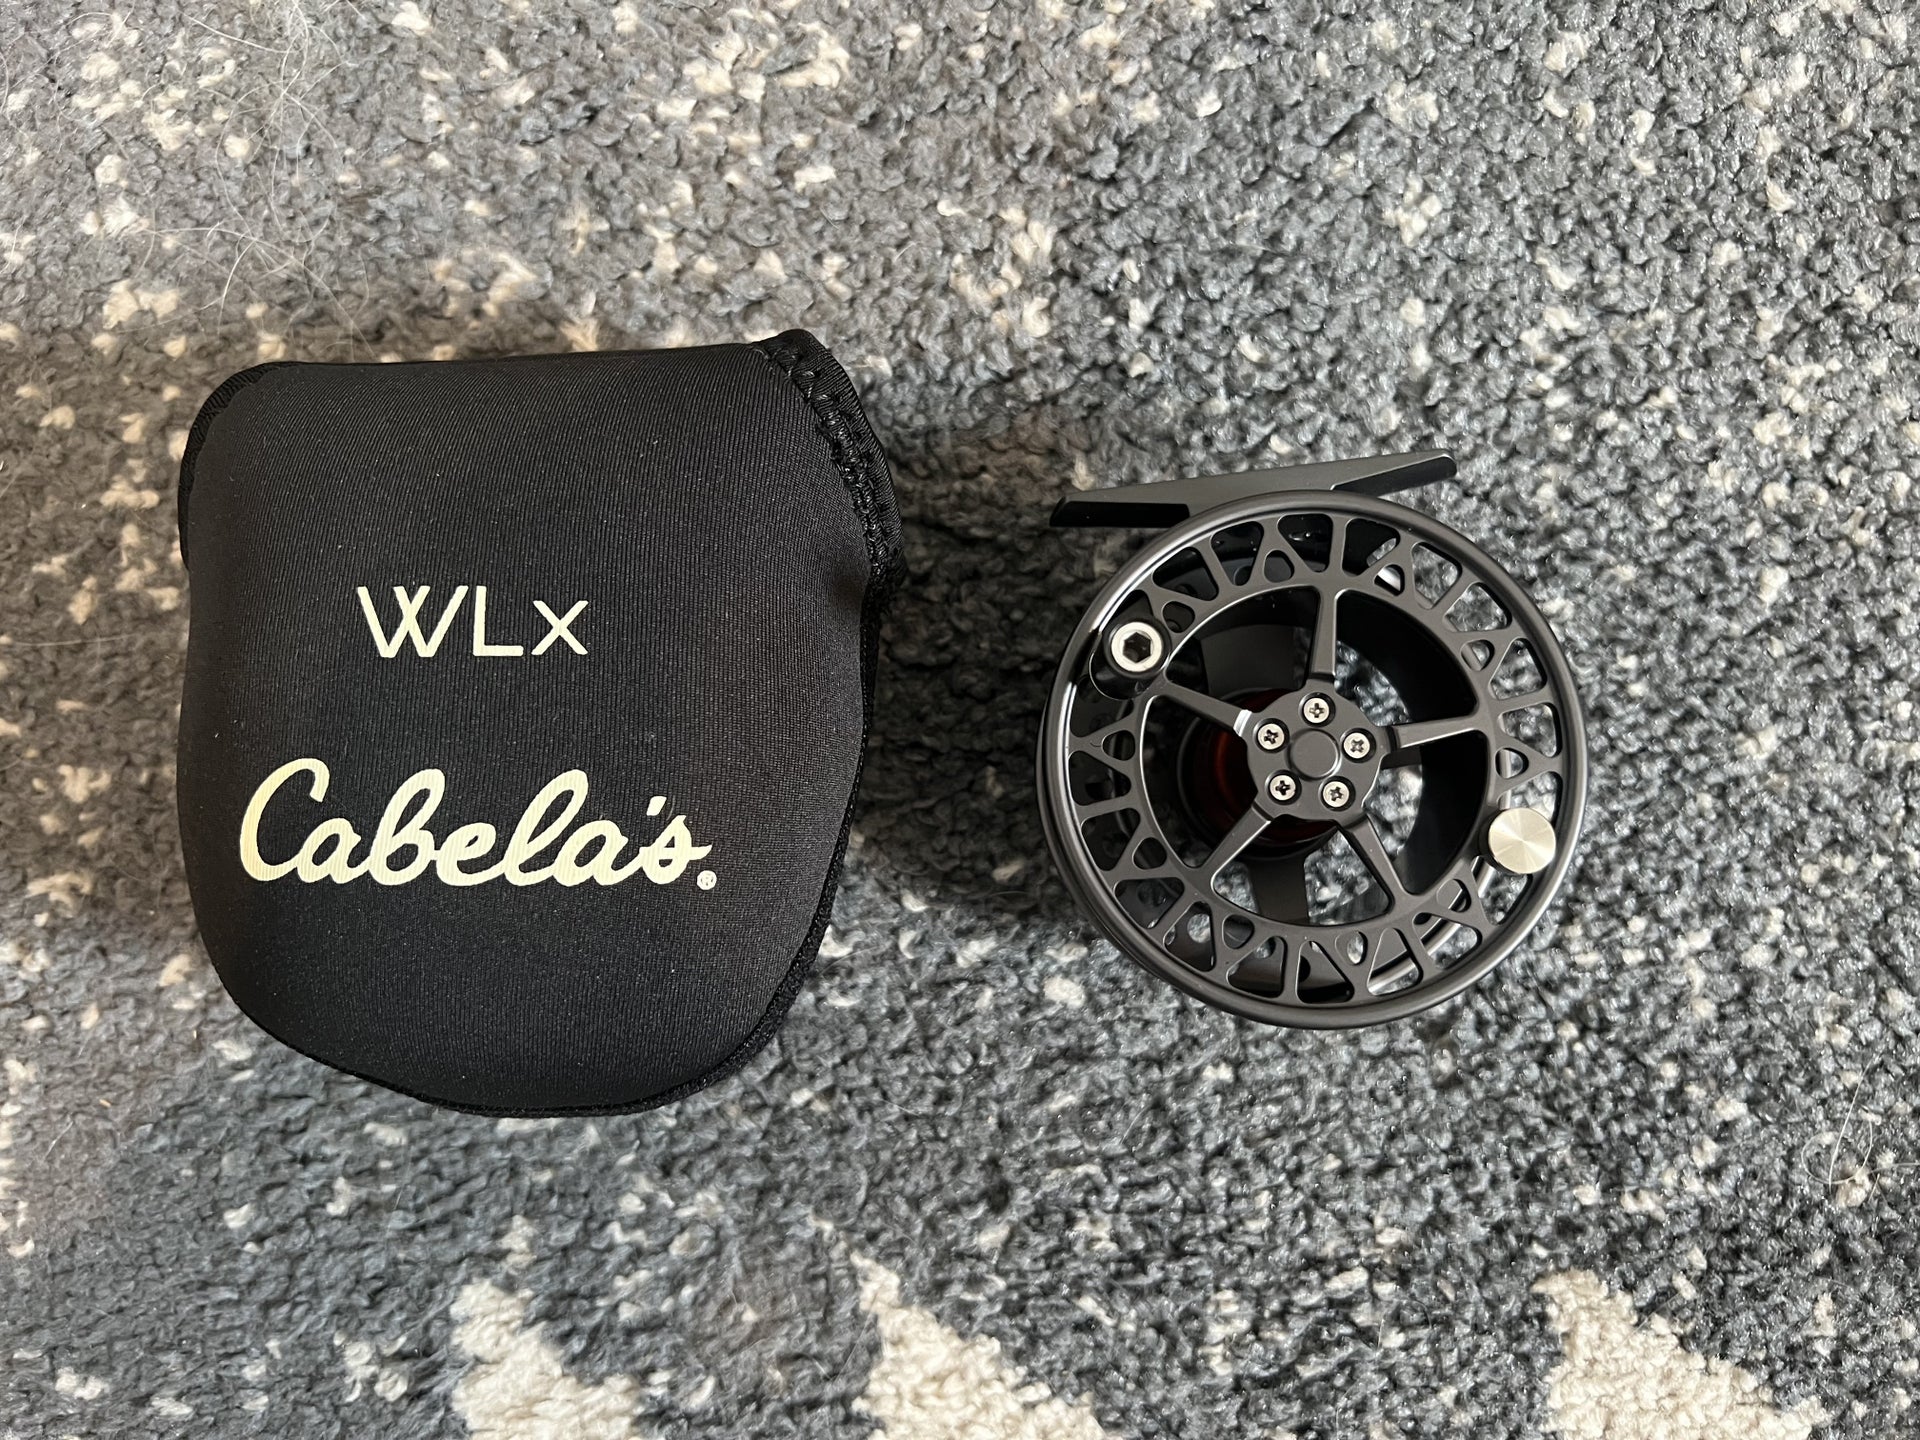 Cabelas WLX (Lamson made) 2/3 Fly Reel